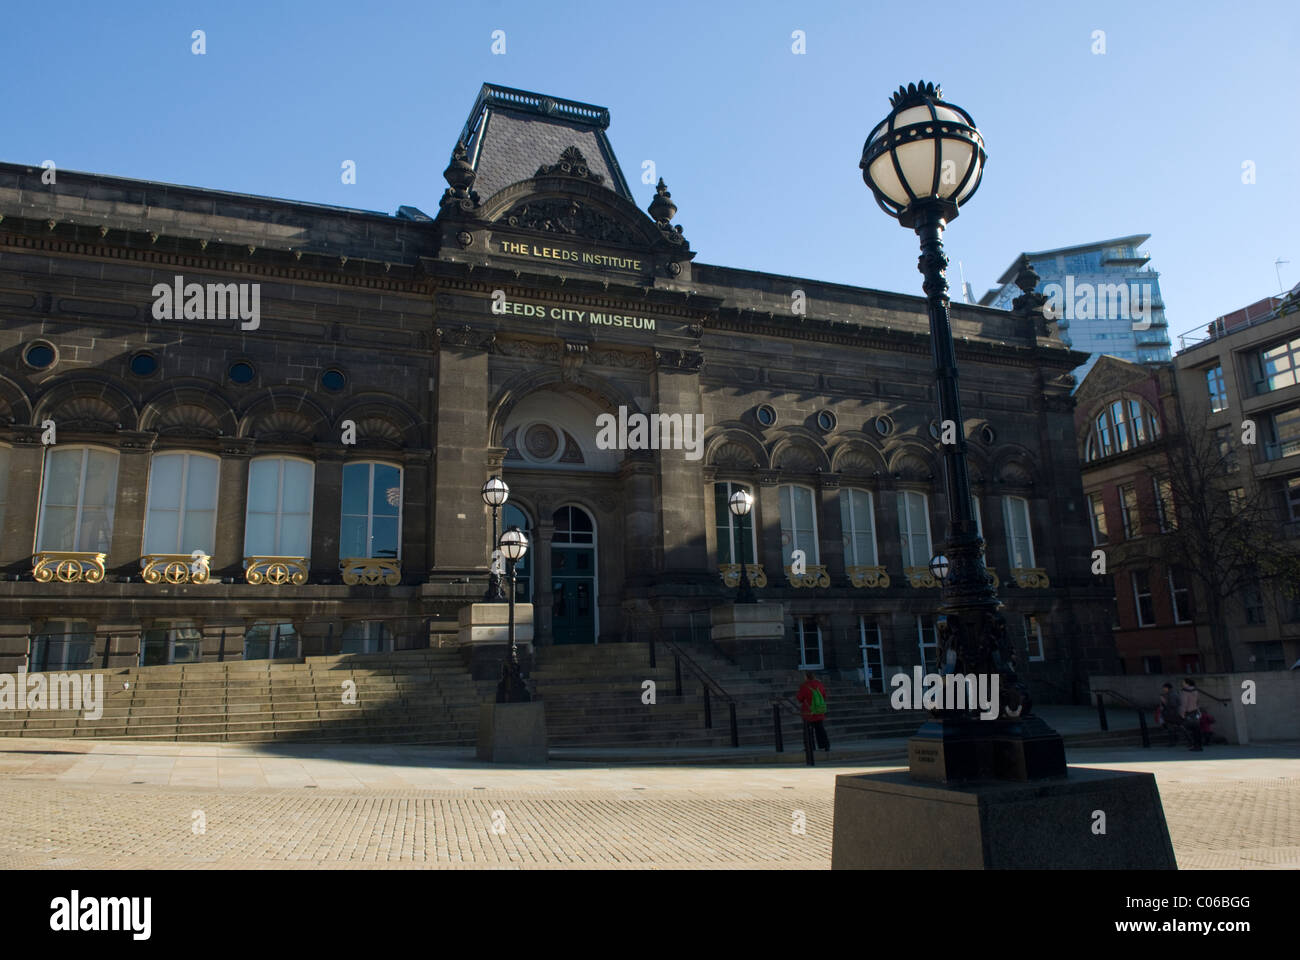 The Leeds City Museum, Leeds, West Yorkshire, England. Stock Photo